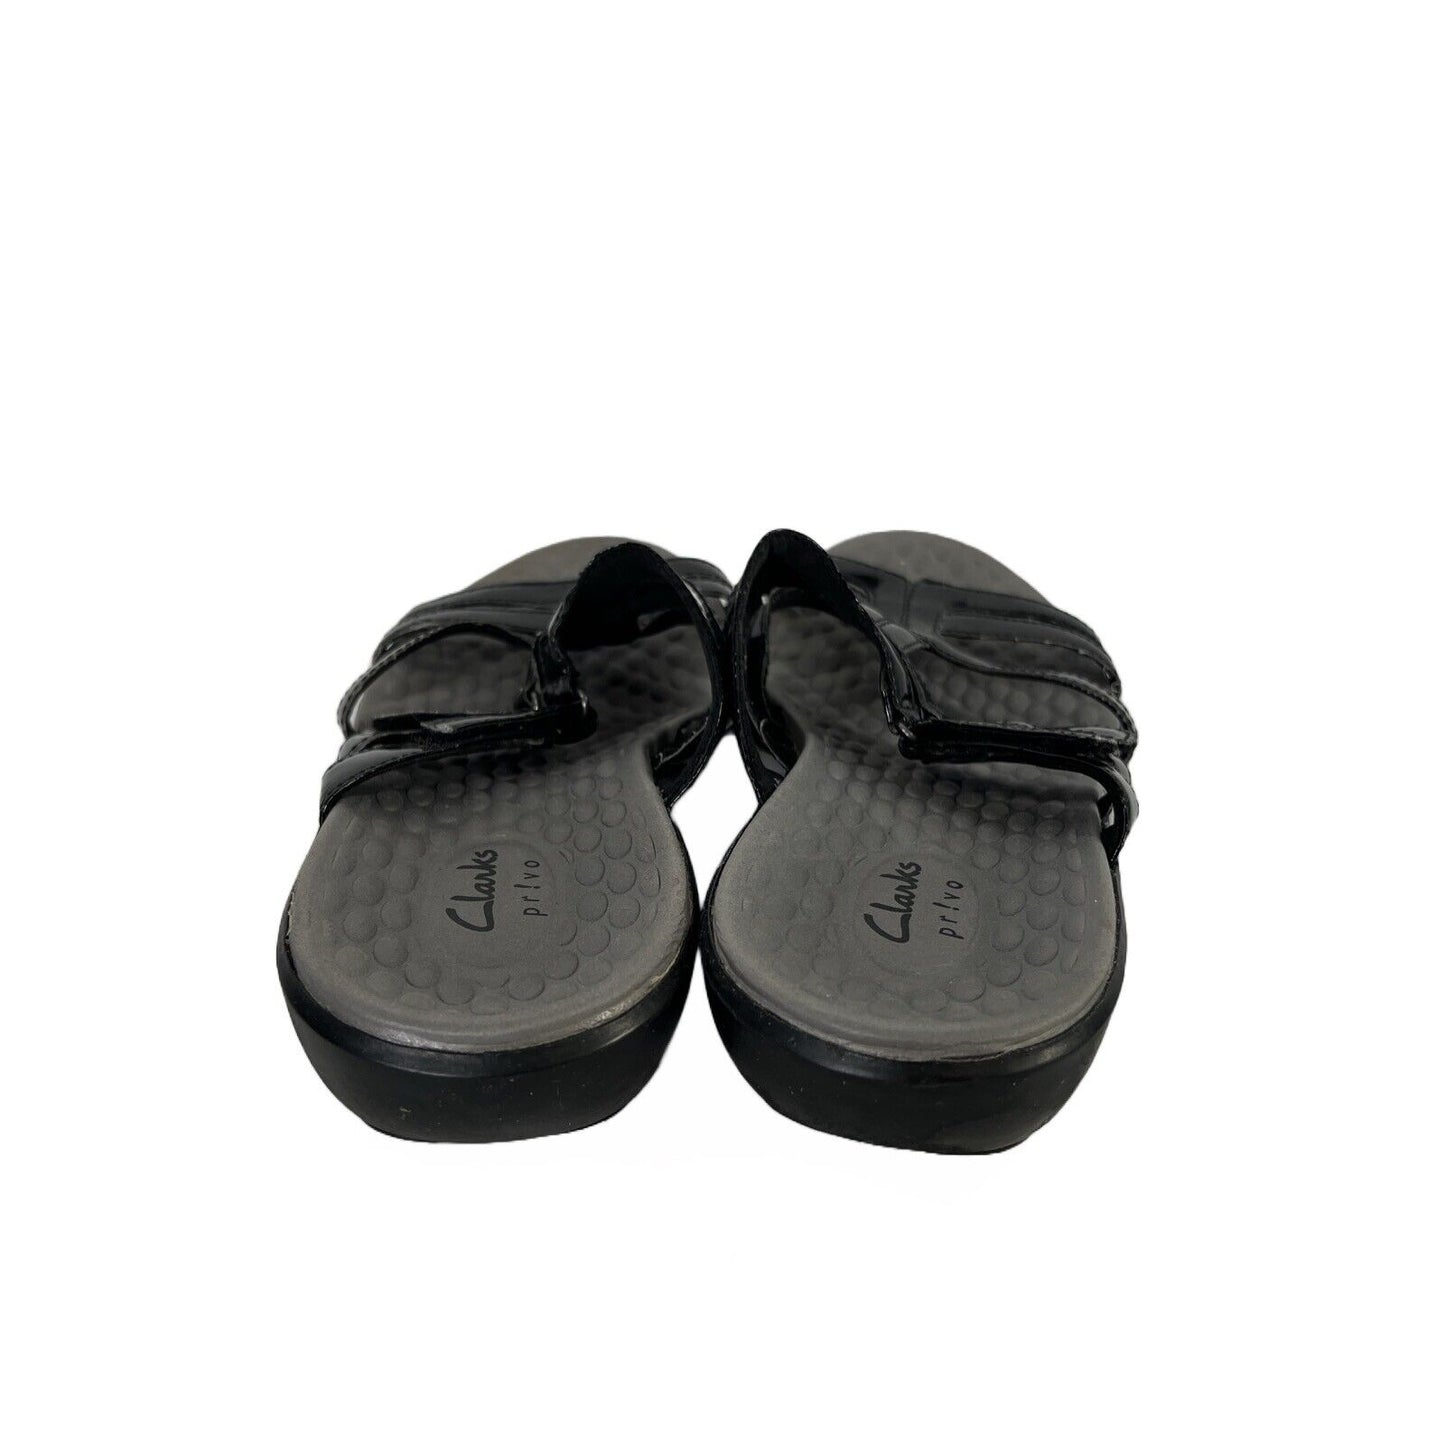 Clarks Women's Black Patent Privo Strappy Sandals - 11M